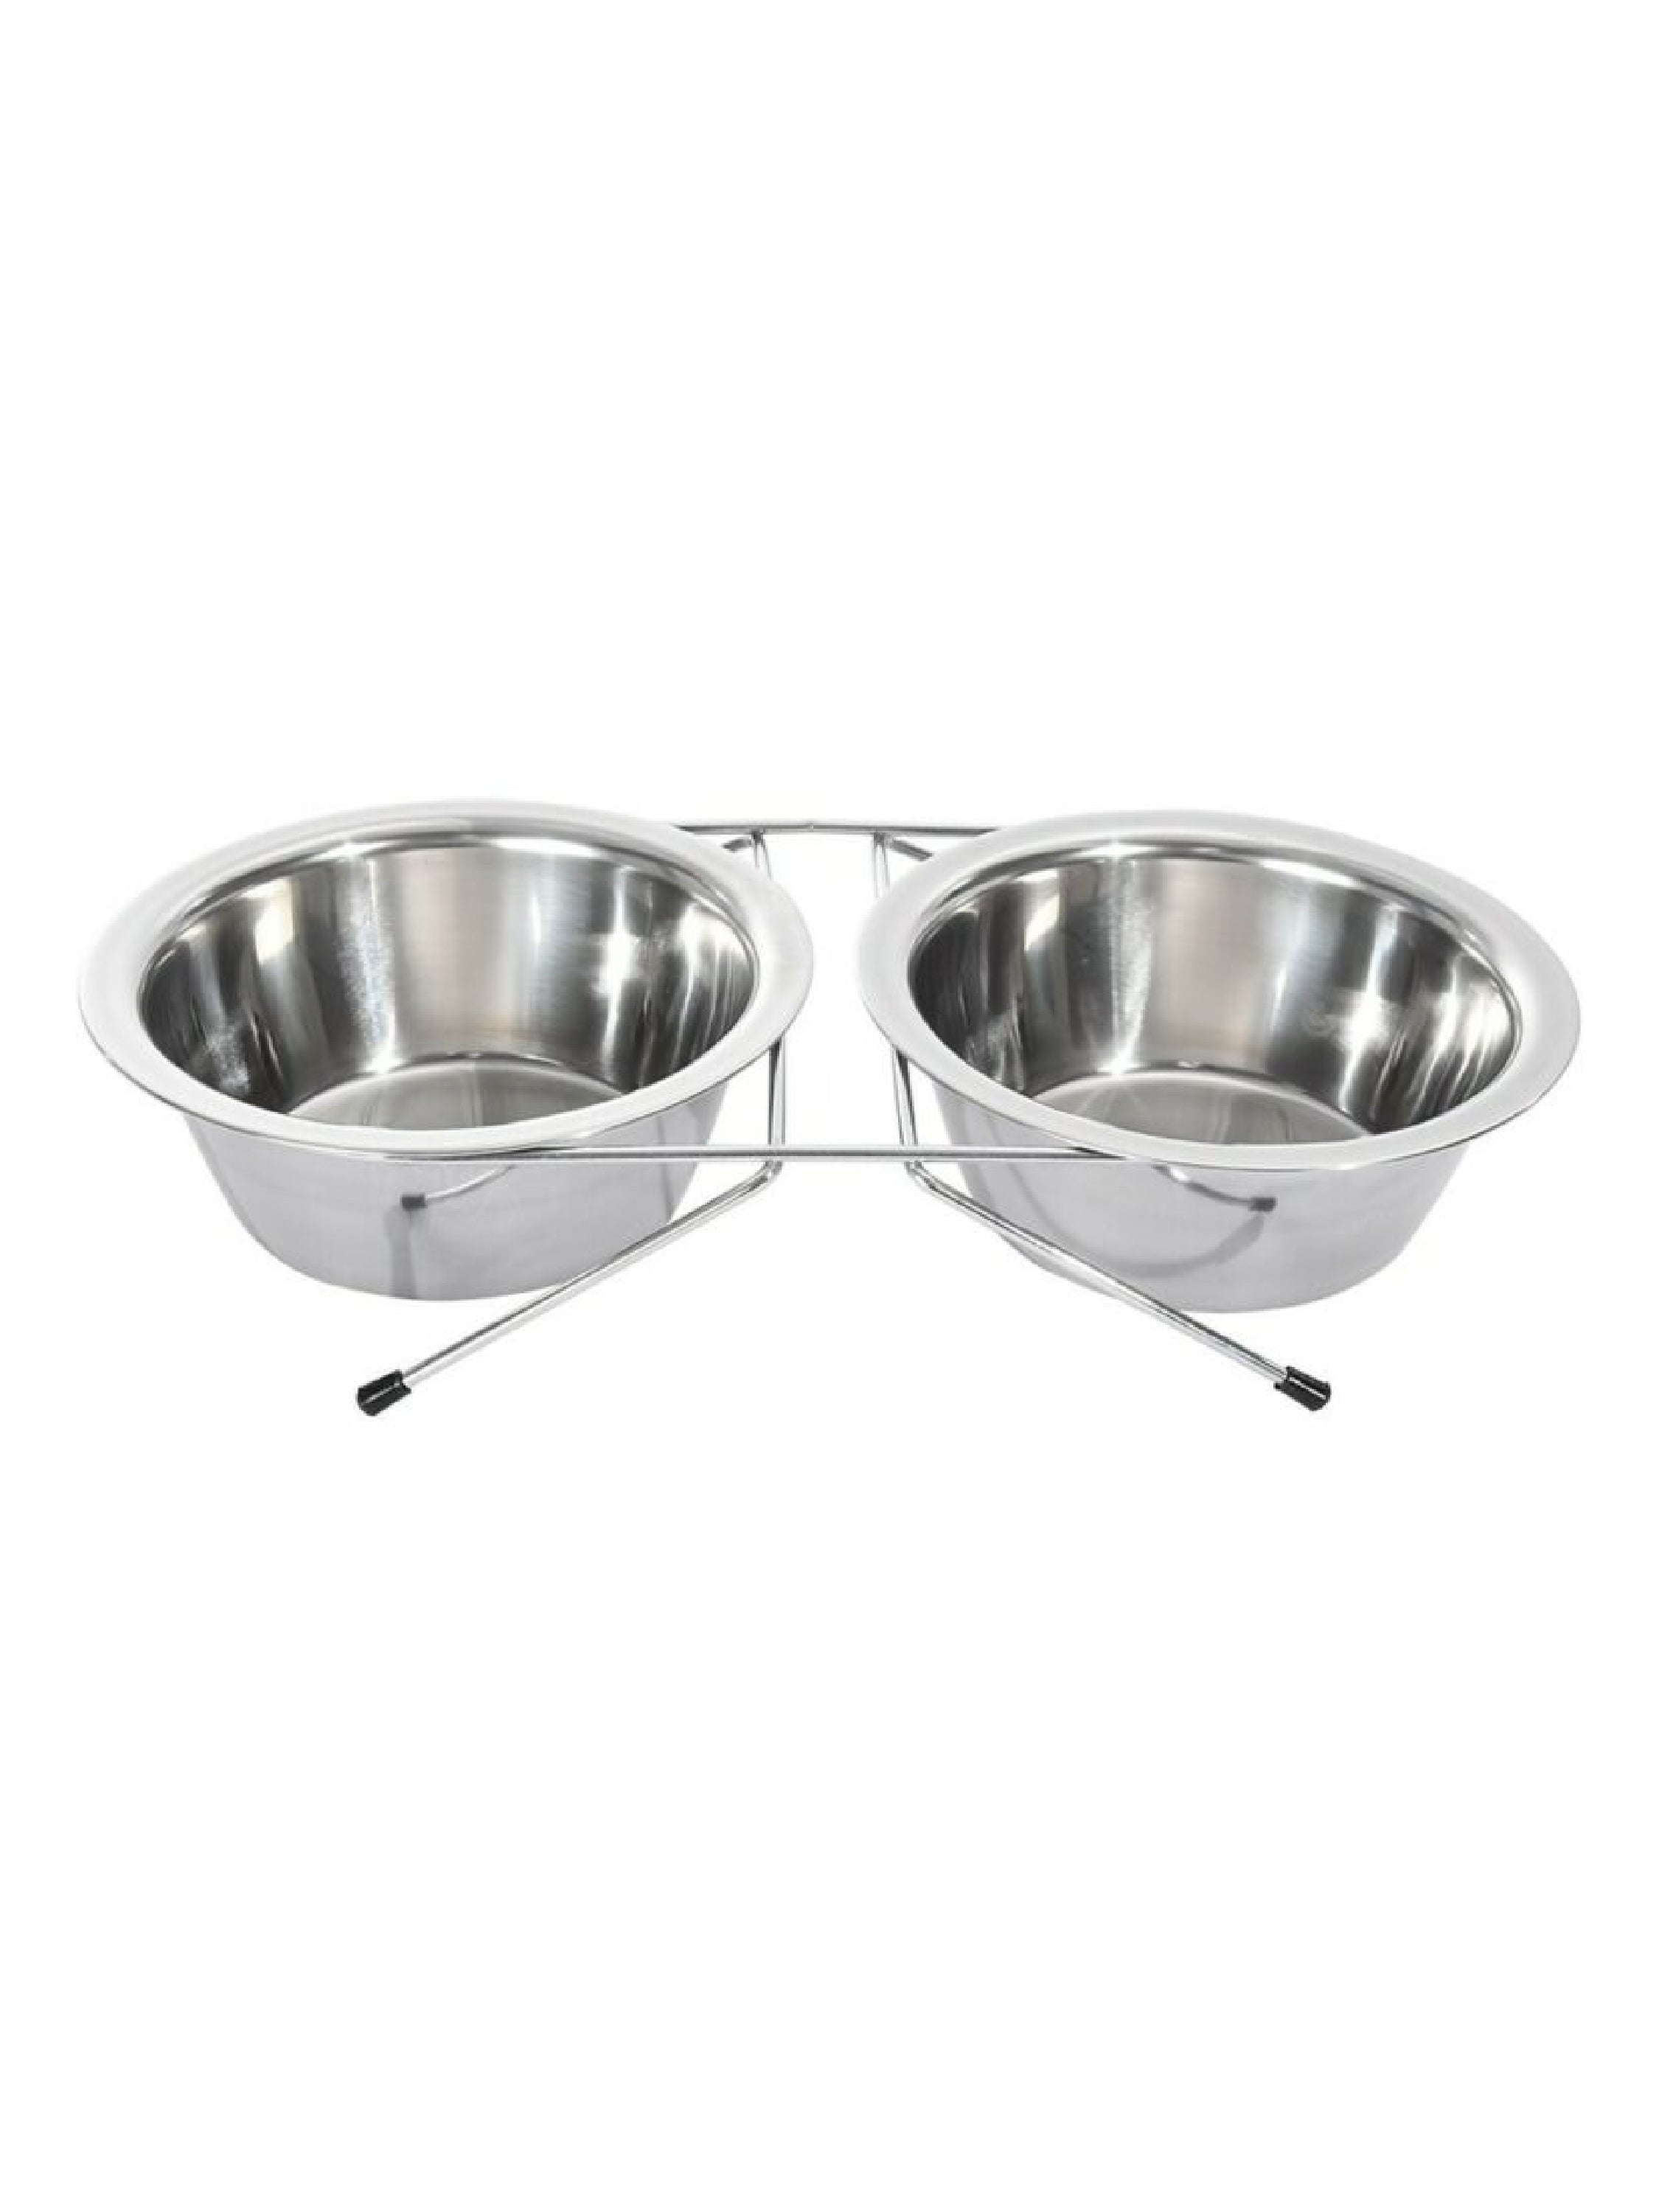 Pet Supplies : Pets Empire Stainless Steel Dog Bowl (Medium, Set of 2) 